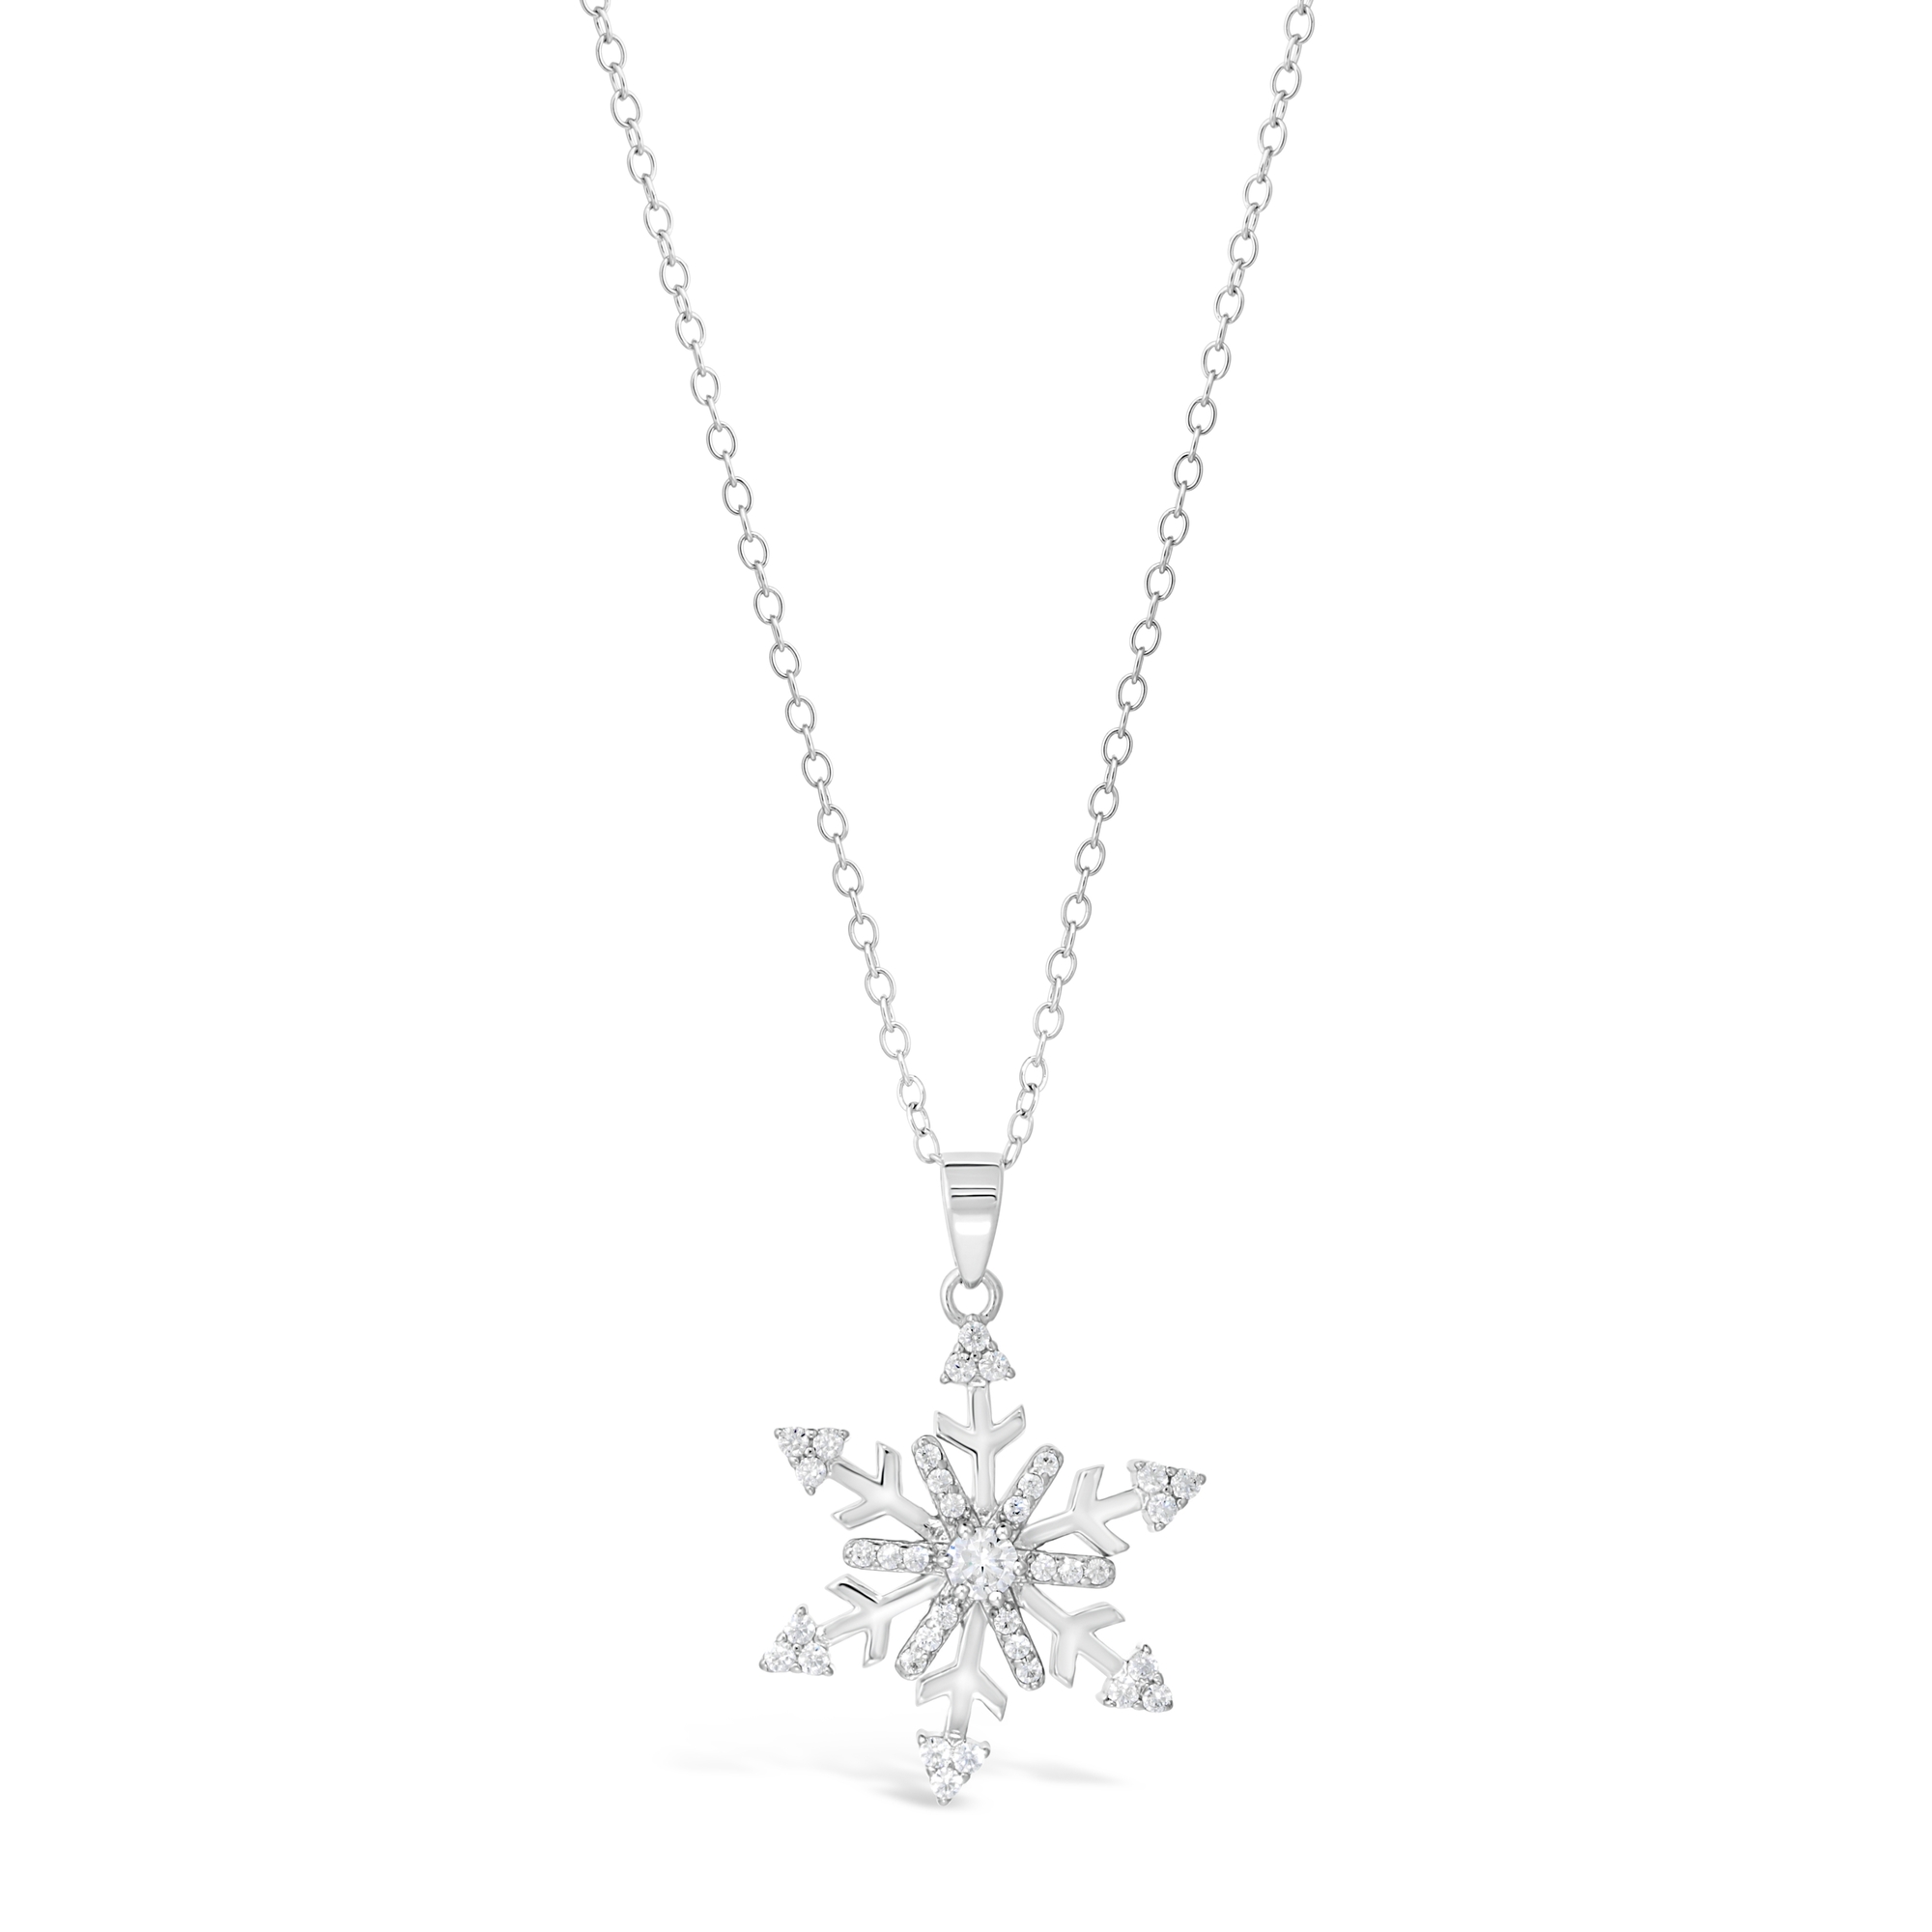 44452-pendant-fashion-jewelry-sterling-silver-cubic-zirconia-round-1mm-44452-2.jpg